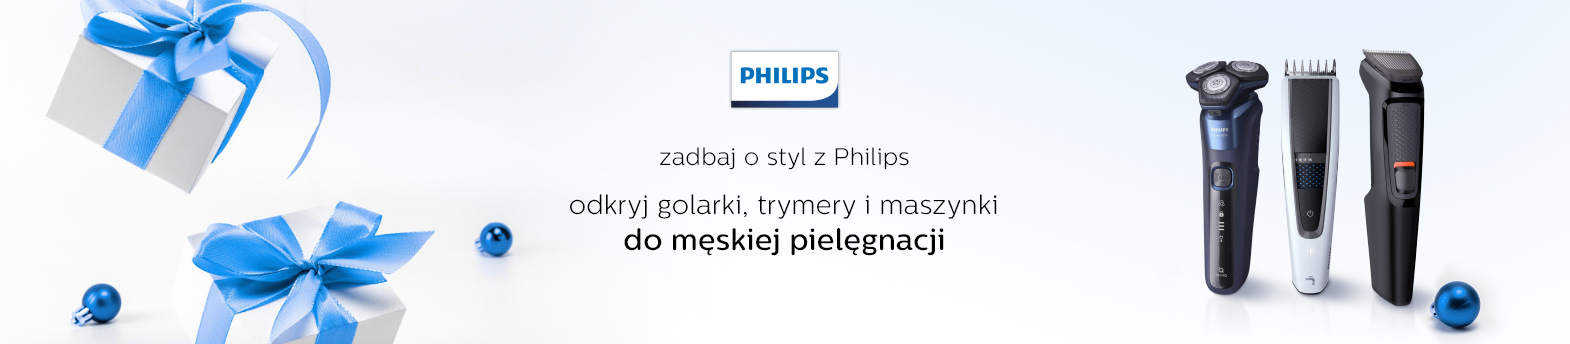 zadbaj o styl z Philips